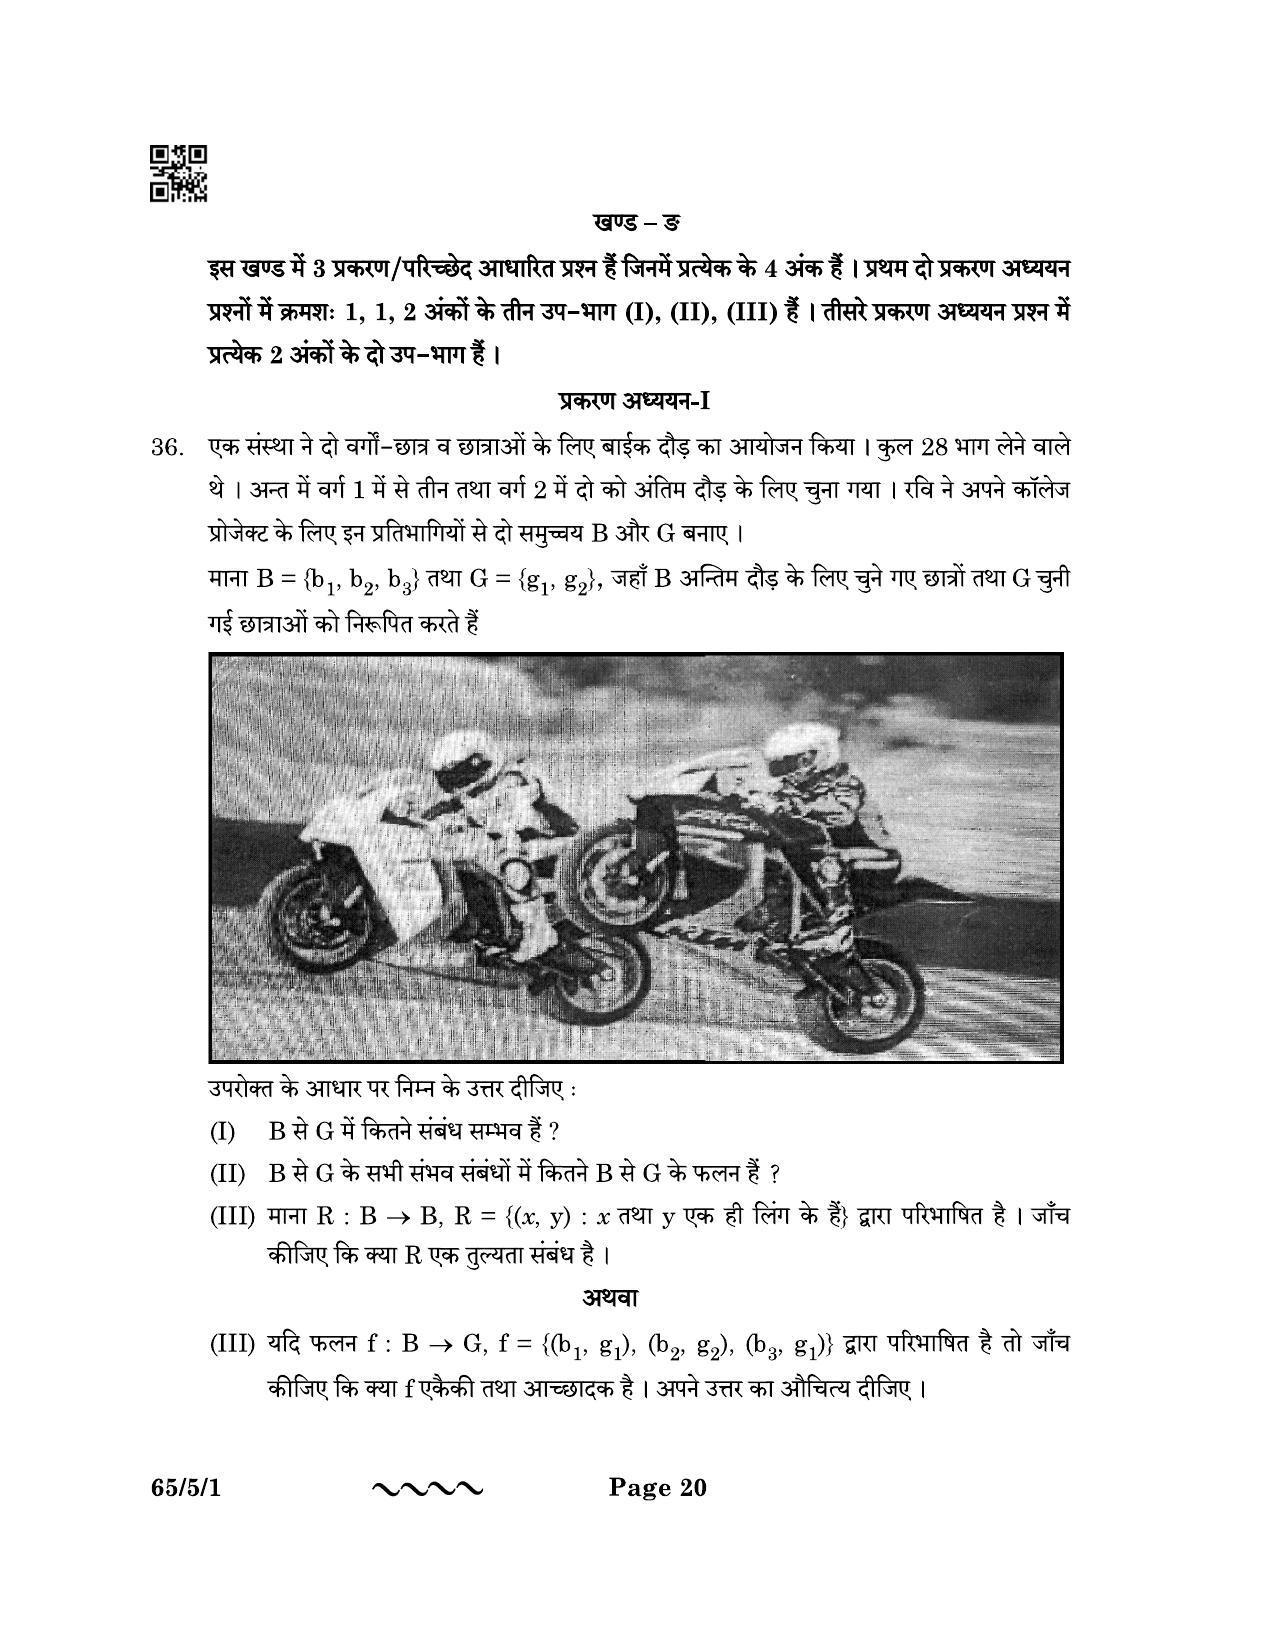 CBSE Class 12 65-5-1 MATHEMATICS 2023 Question Paper - Page 20